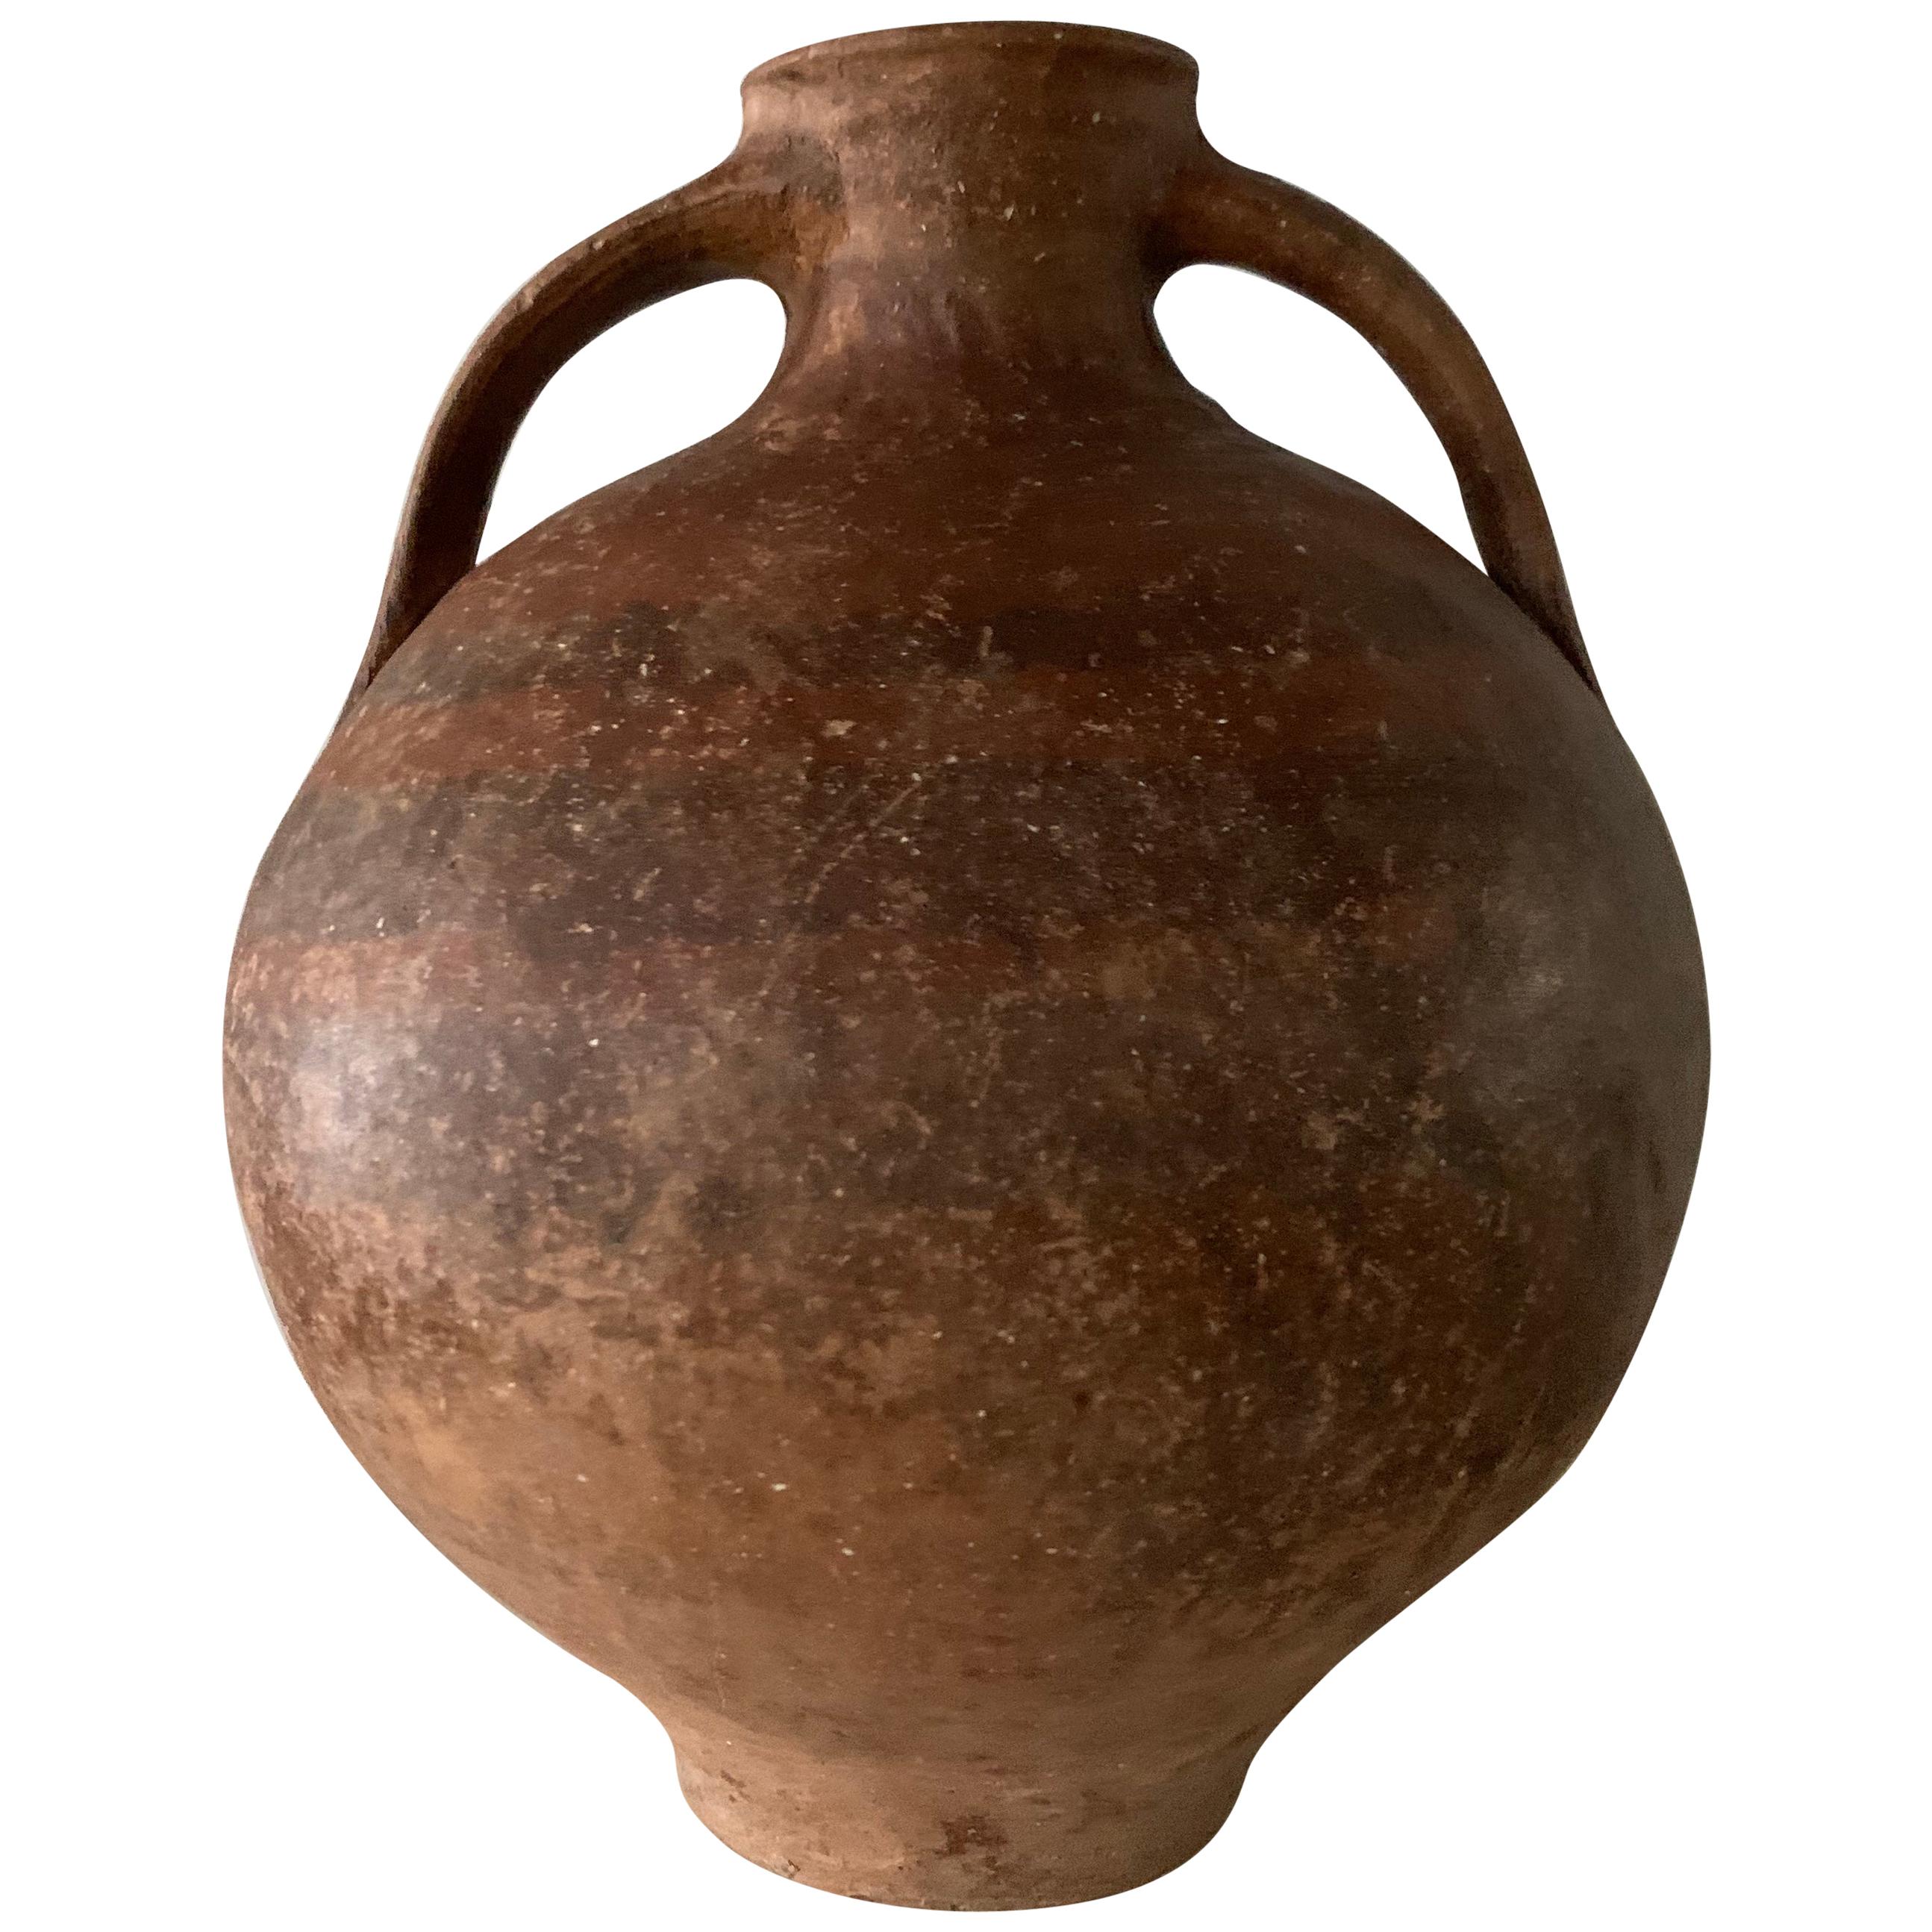 Picher „Cantaro“ aus Calanda, Spanien, Terrakotta-Vase aus dem 18. Jahrhundert